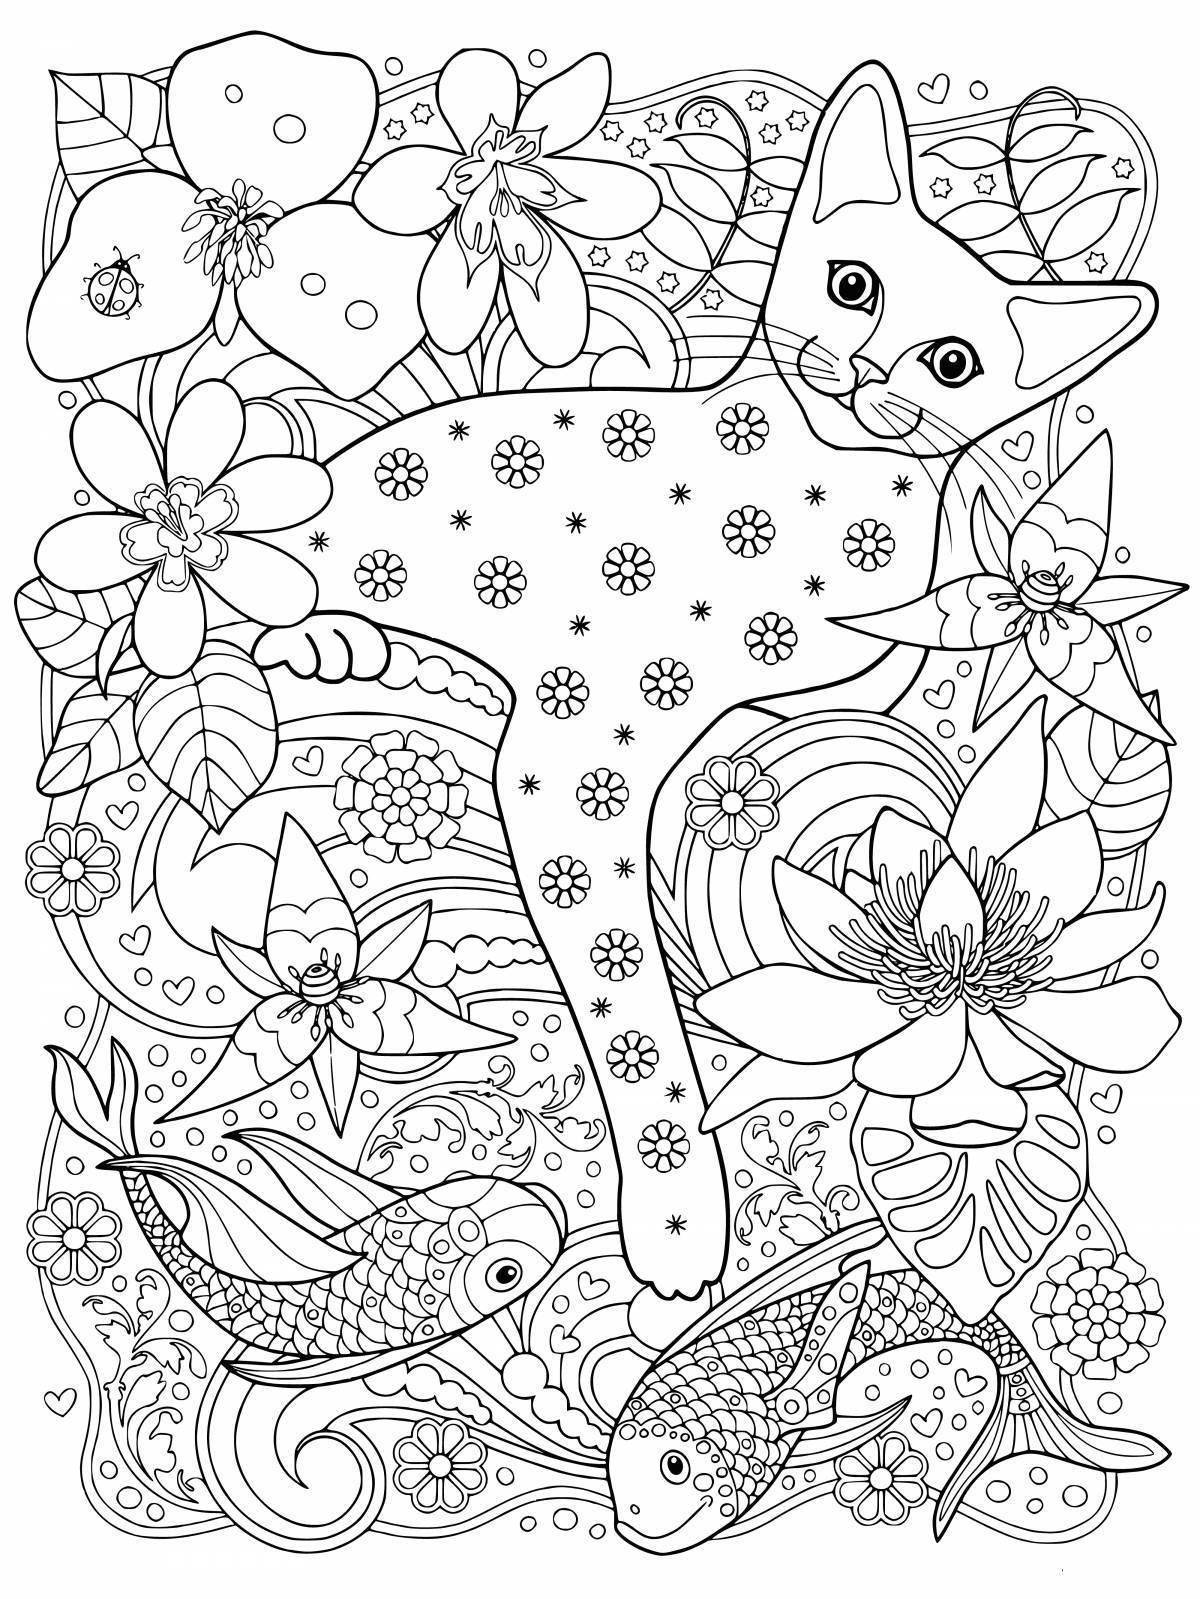 Adorable anti-stress cat coloring book